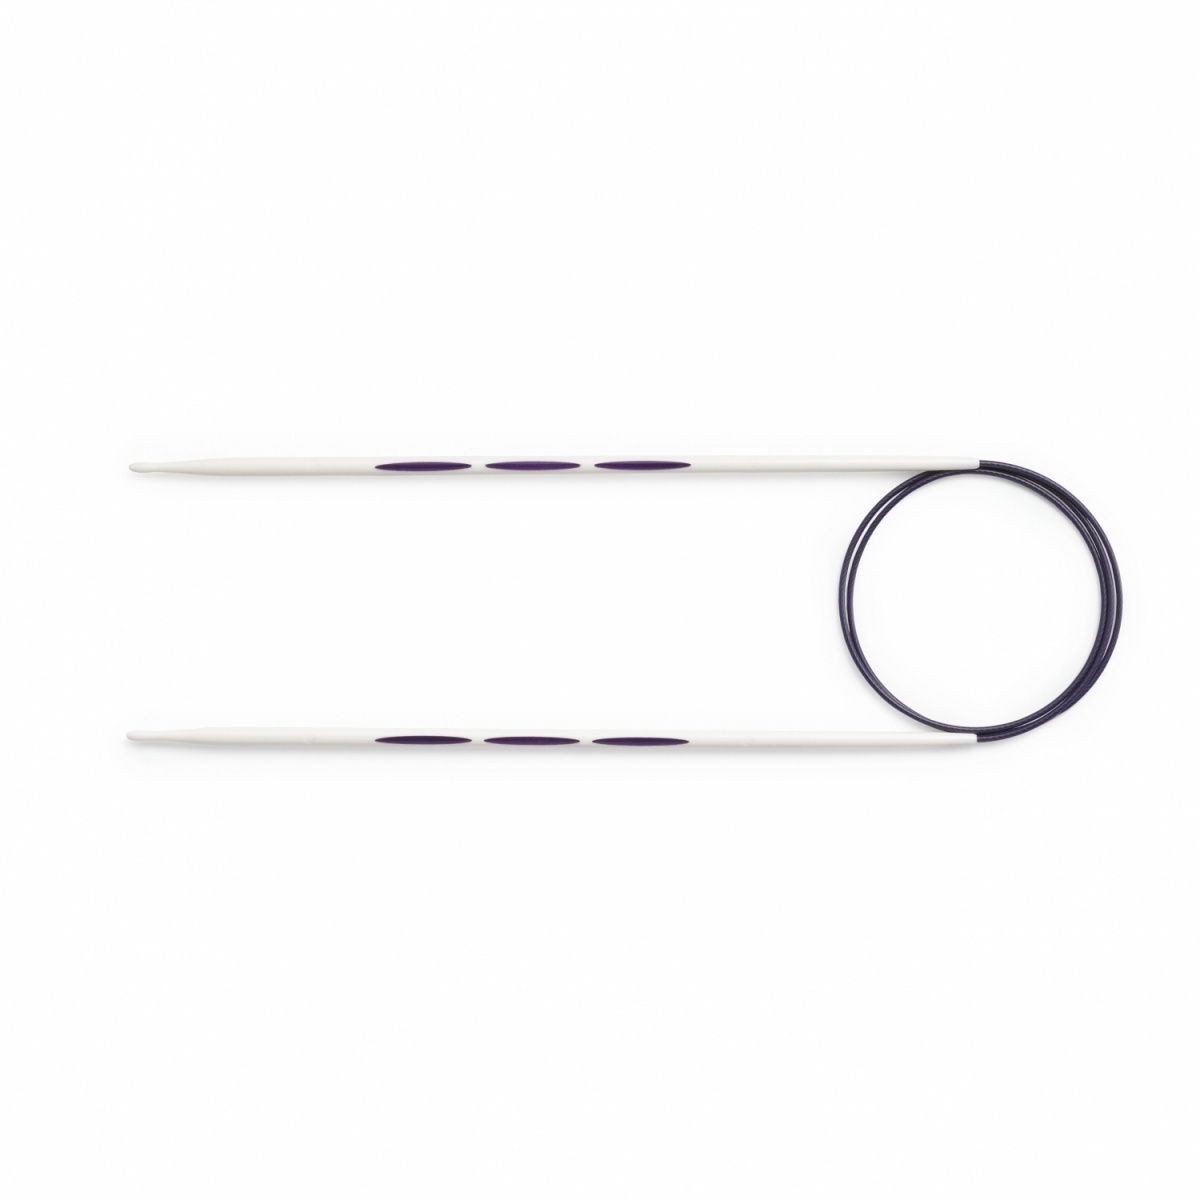 Circular knitting needles, Ergonomic, 3mm фото 2